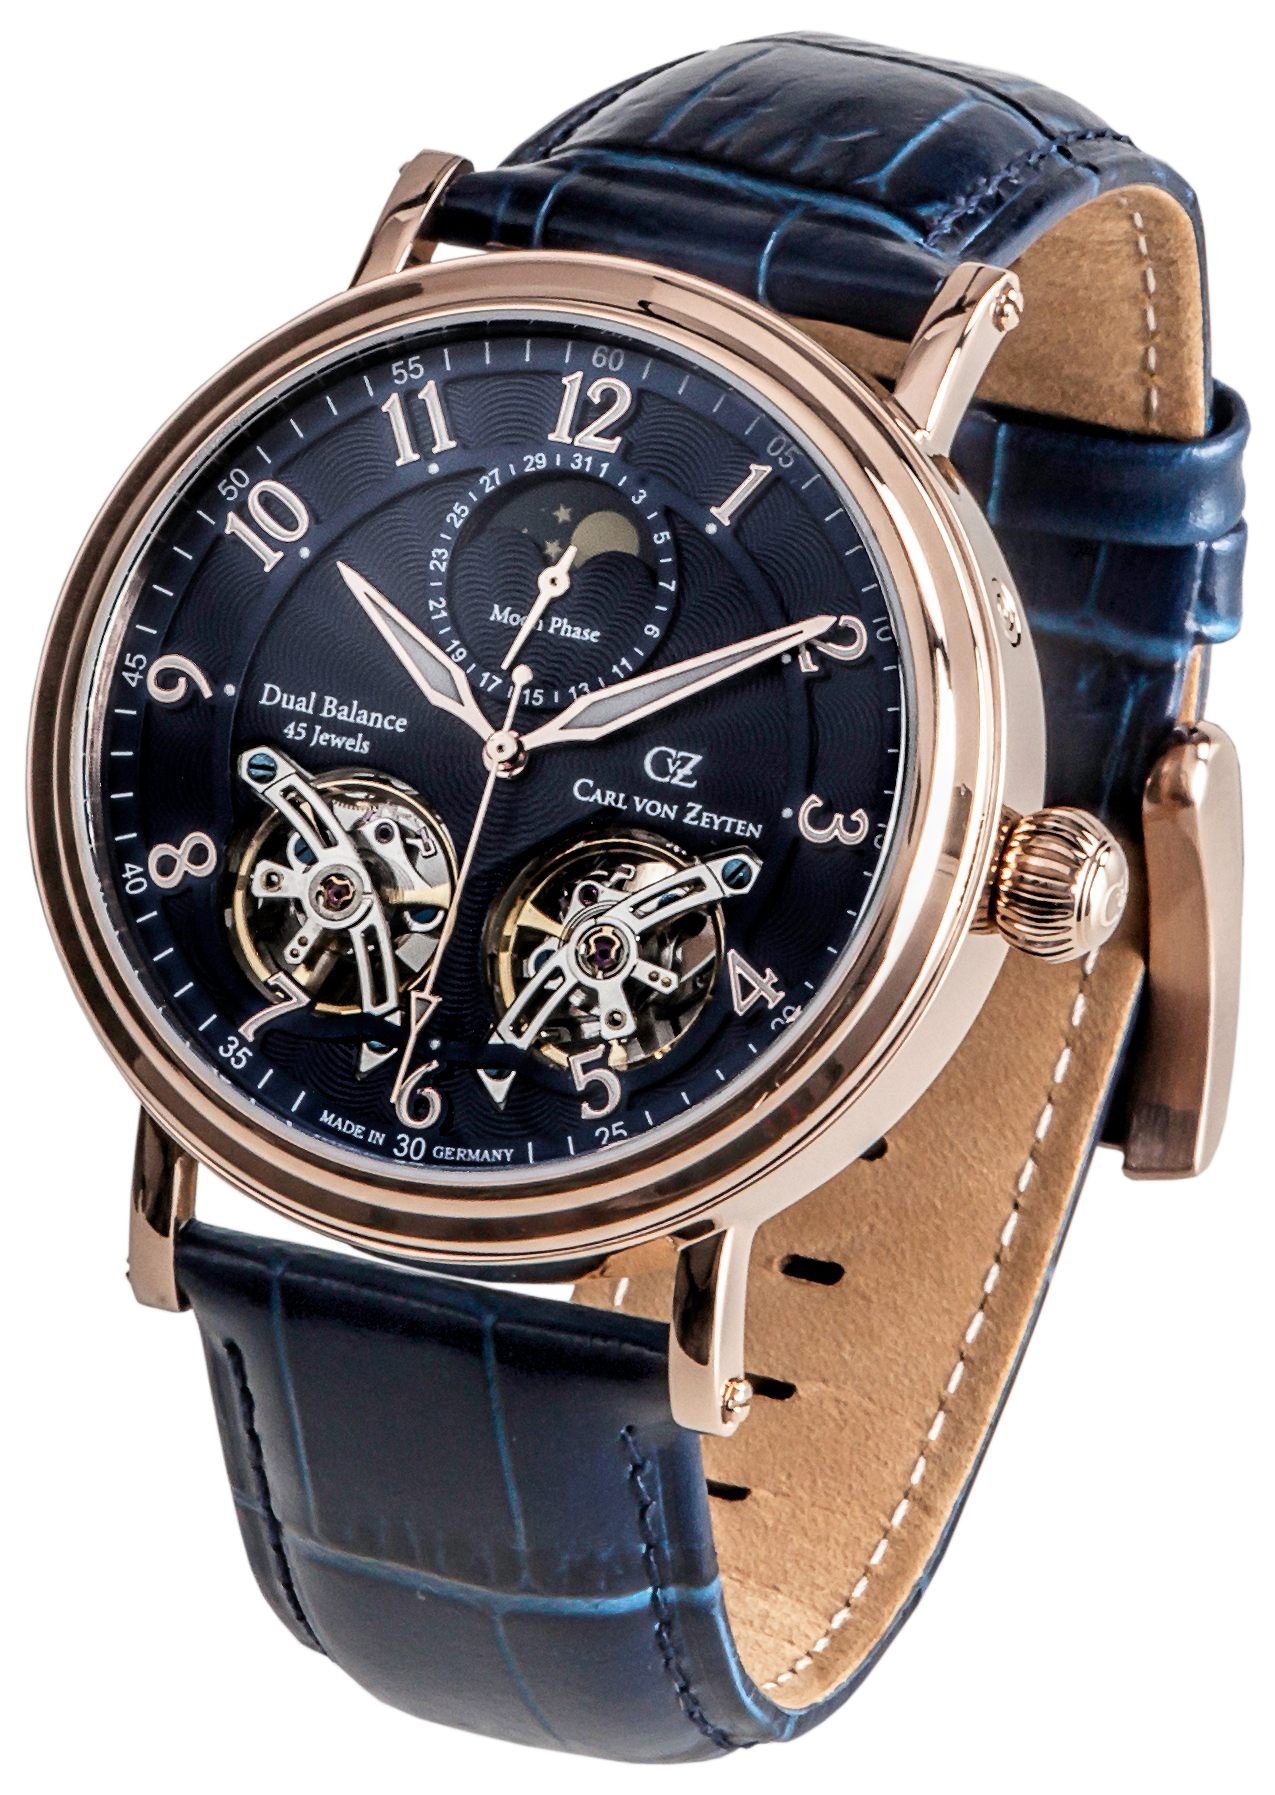 Carl von Zeyten Herren Analog Automatik Uhr mit Leder Armband CVZ0054RBL